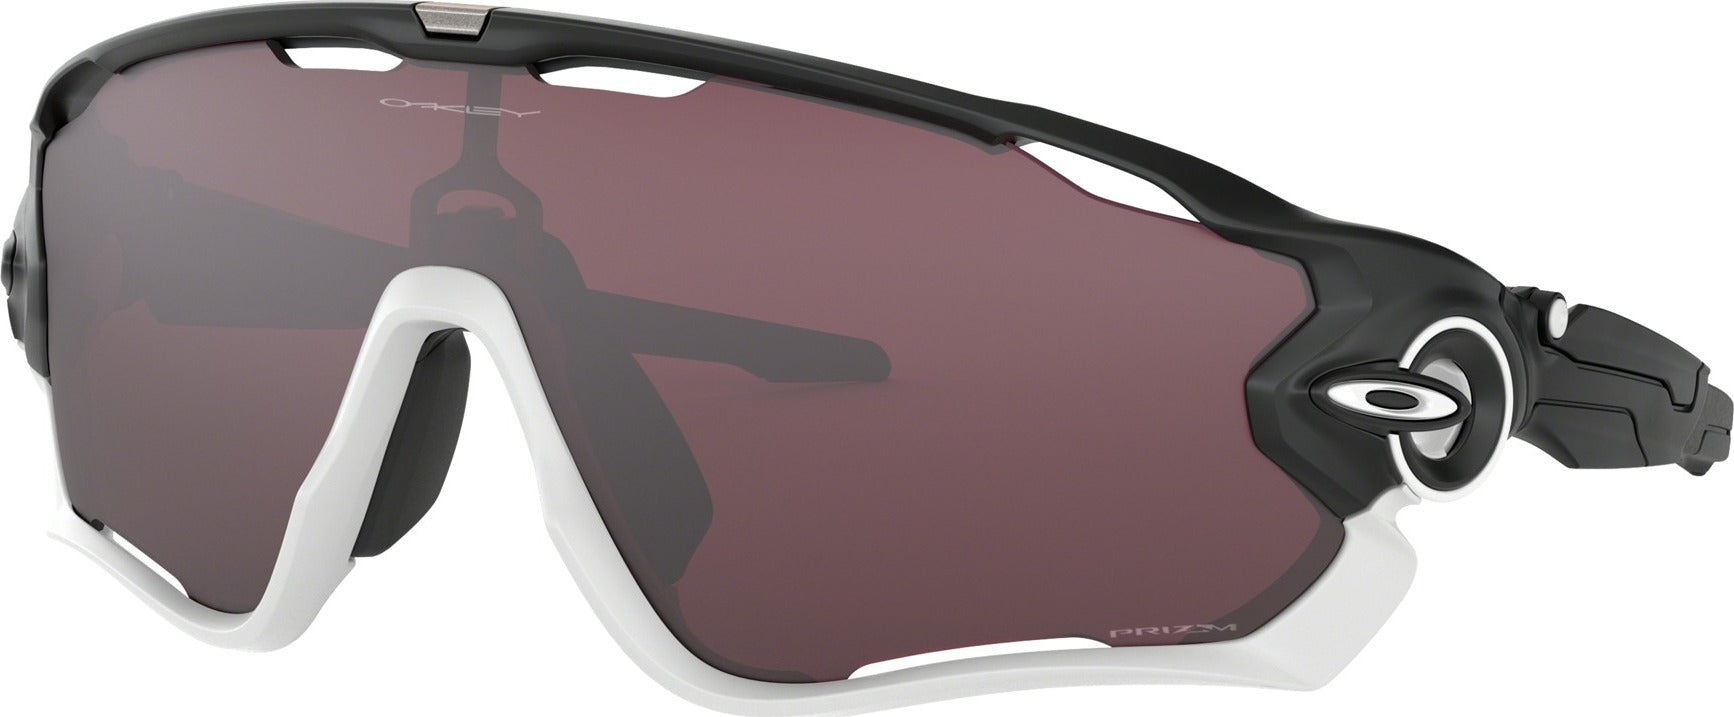 Oakley Jawbreaker Sunglasses - Matte Black - Prizm Road Black Lens |  Altitude Sports